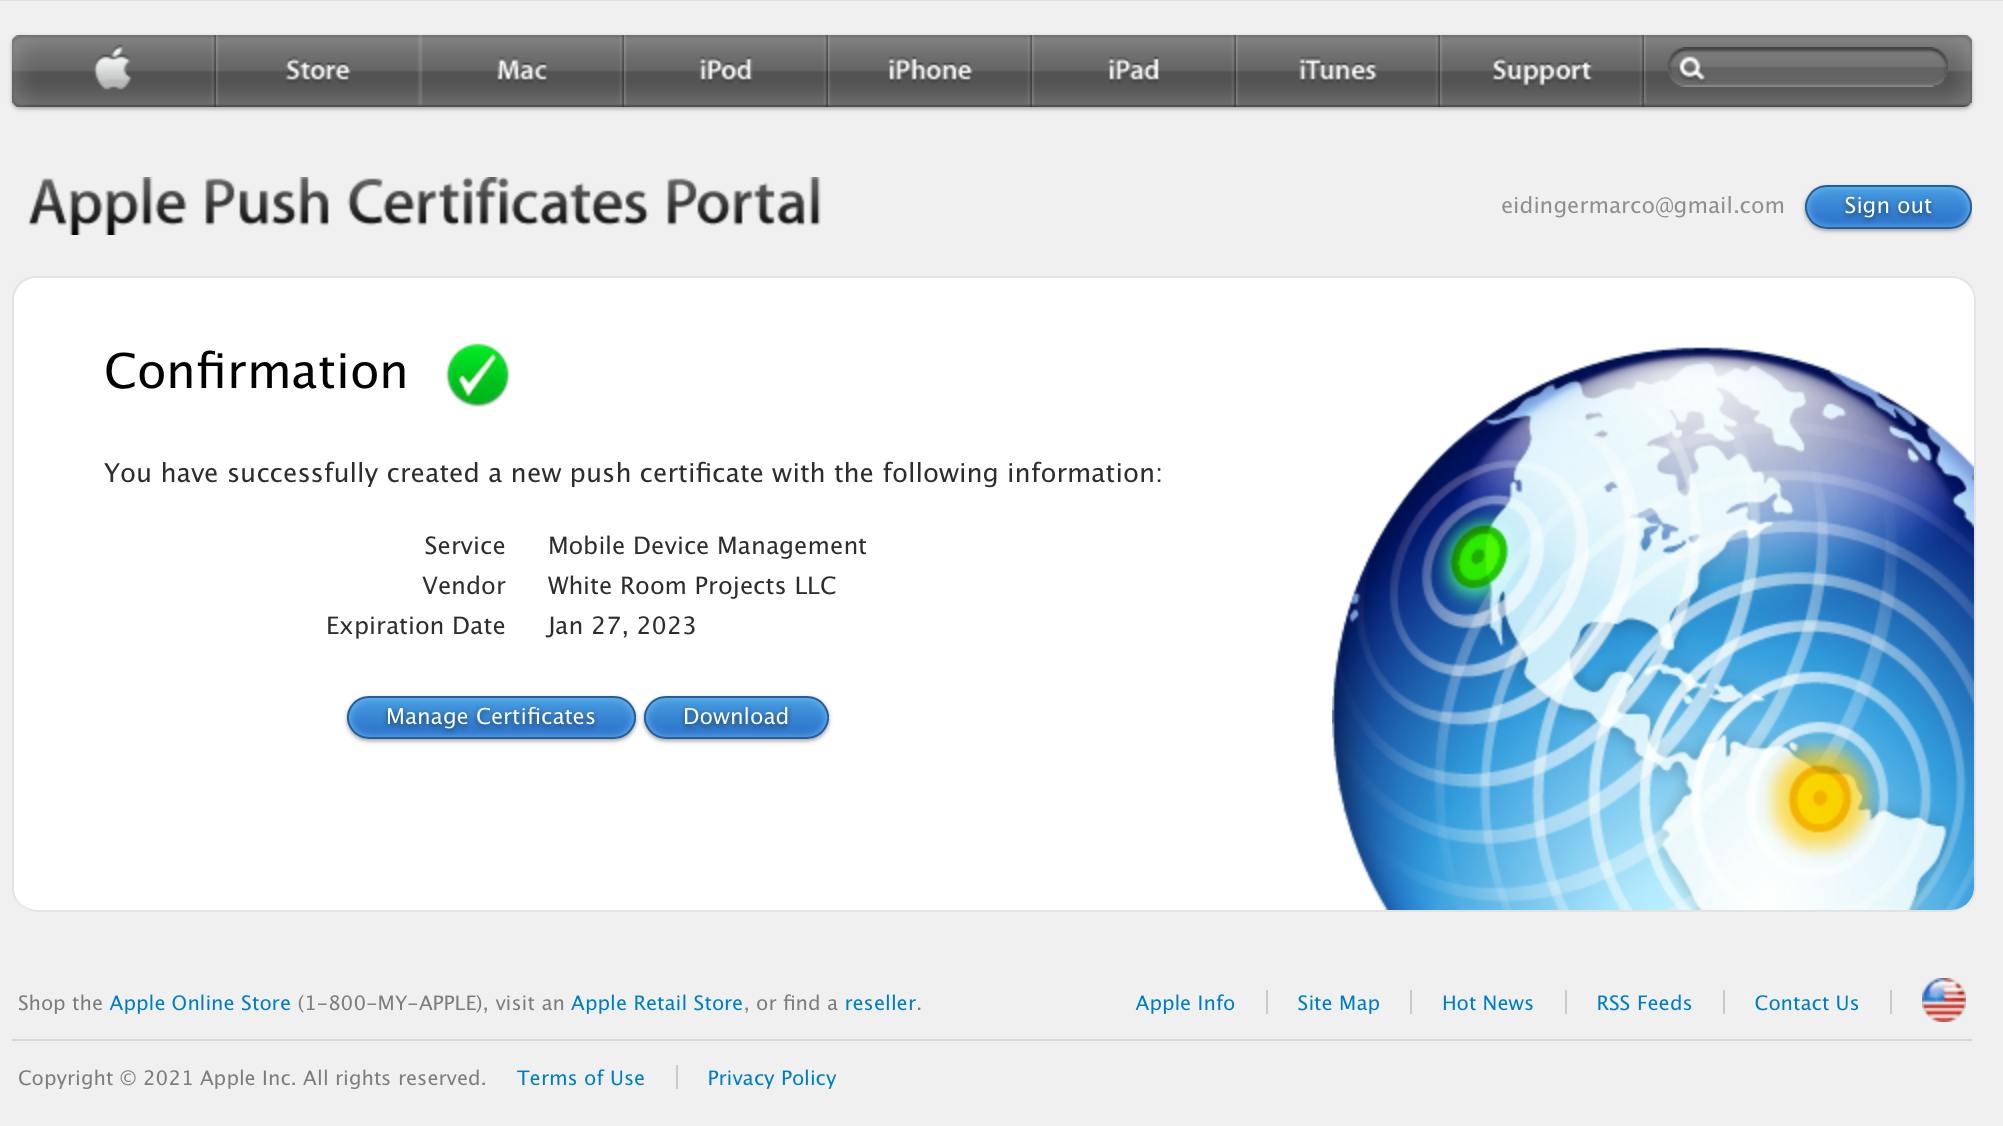 Apple Push Certificate Portal - Confirmation